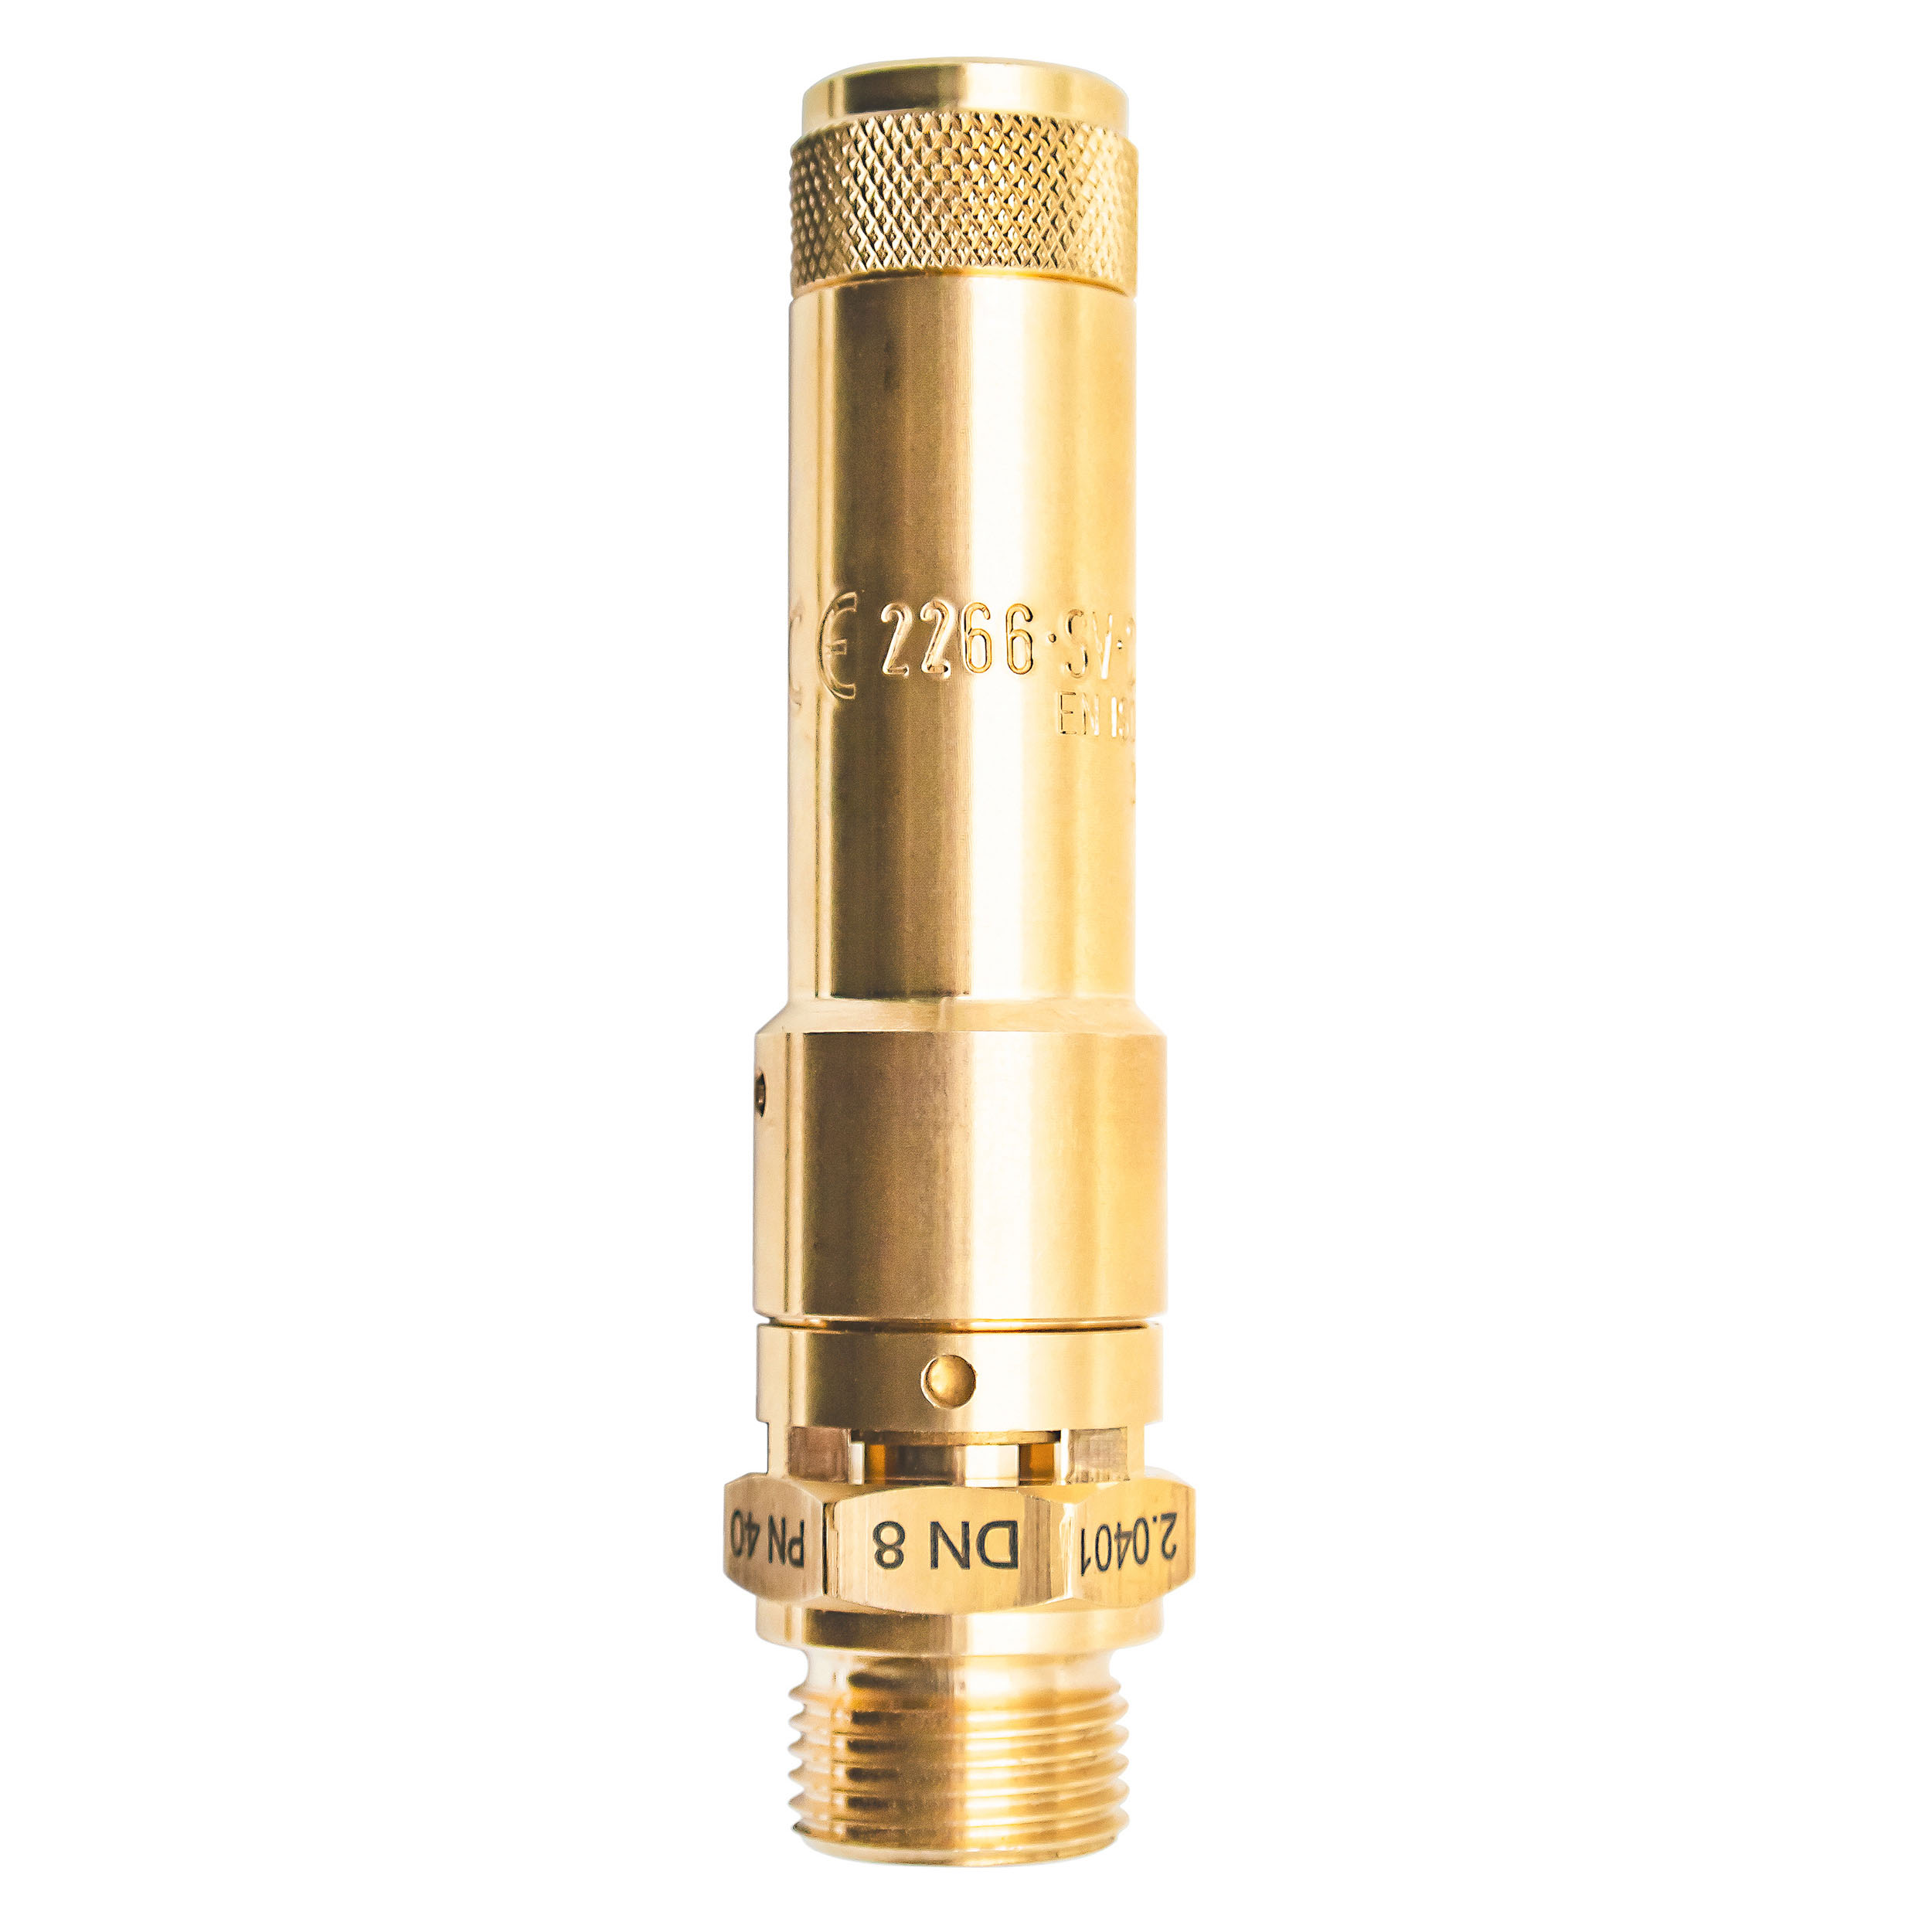 Savety valve component tested DN 8, G¼, set pressure: 17.0 bar (246,5 psi)